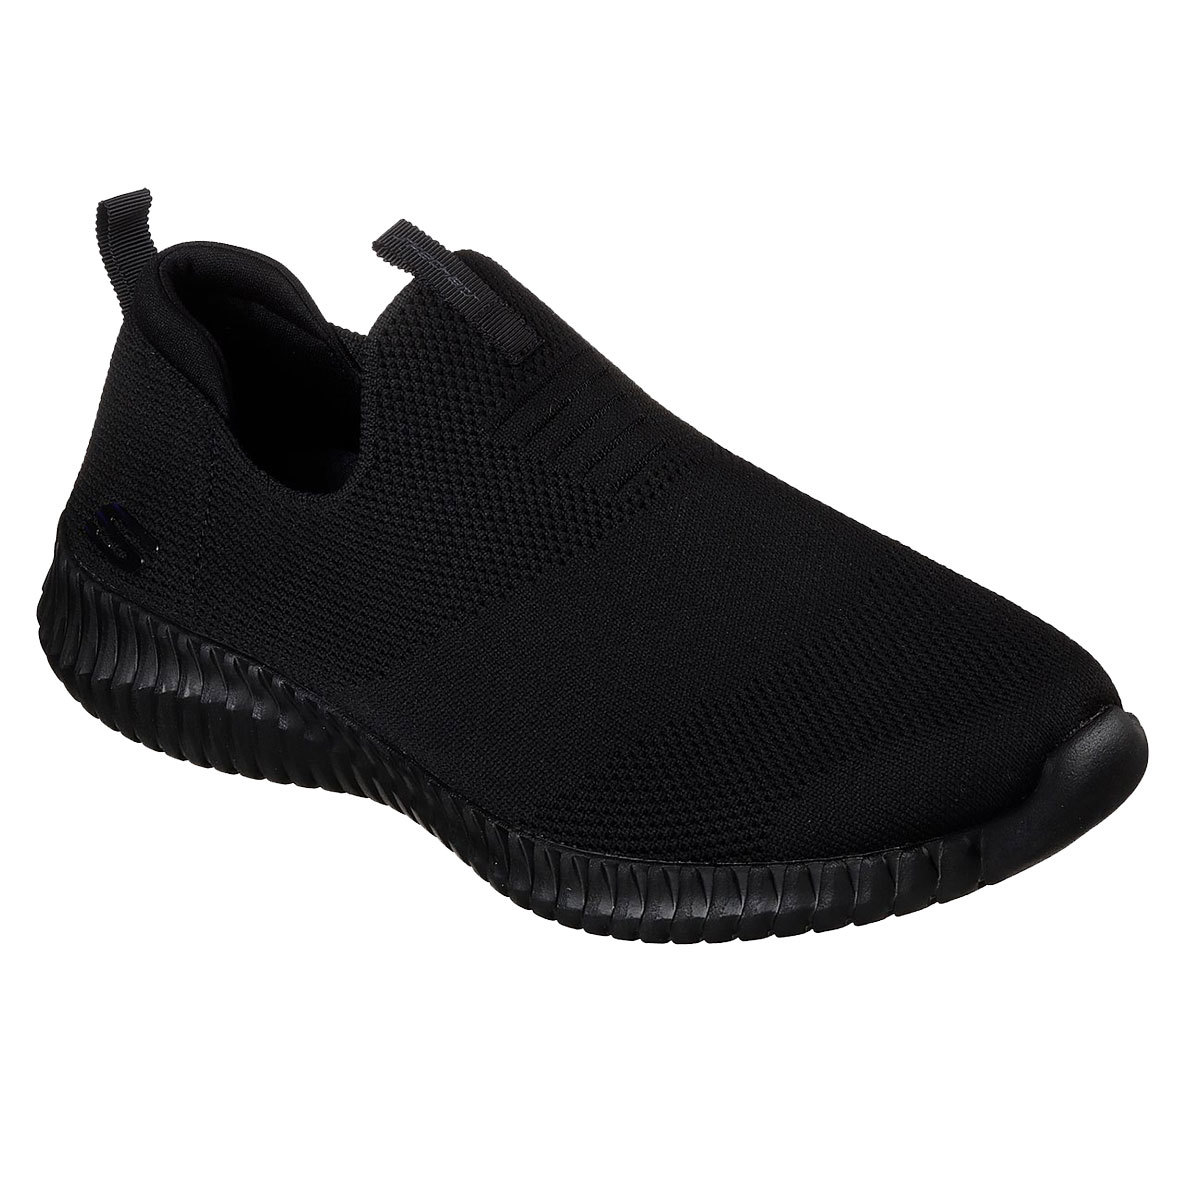 Skechers Men's Elite Flex Wasik Slip On Shoes, Wide - Black, 10.5